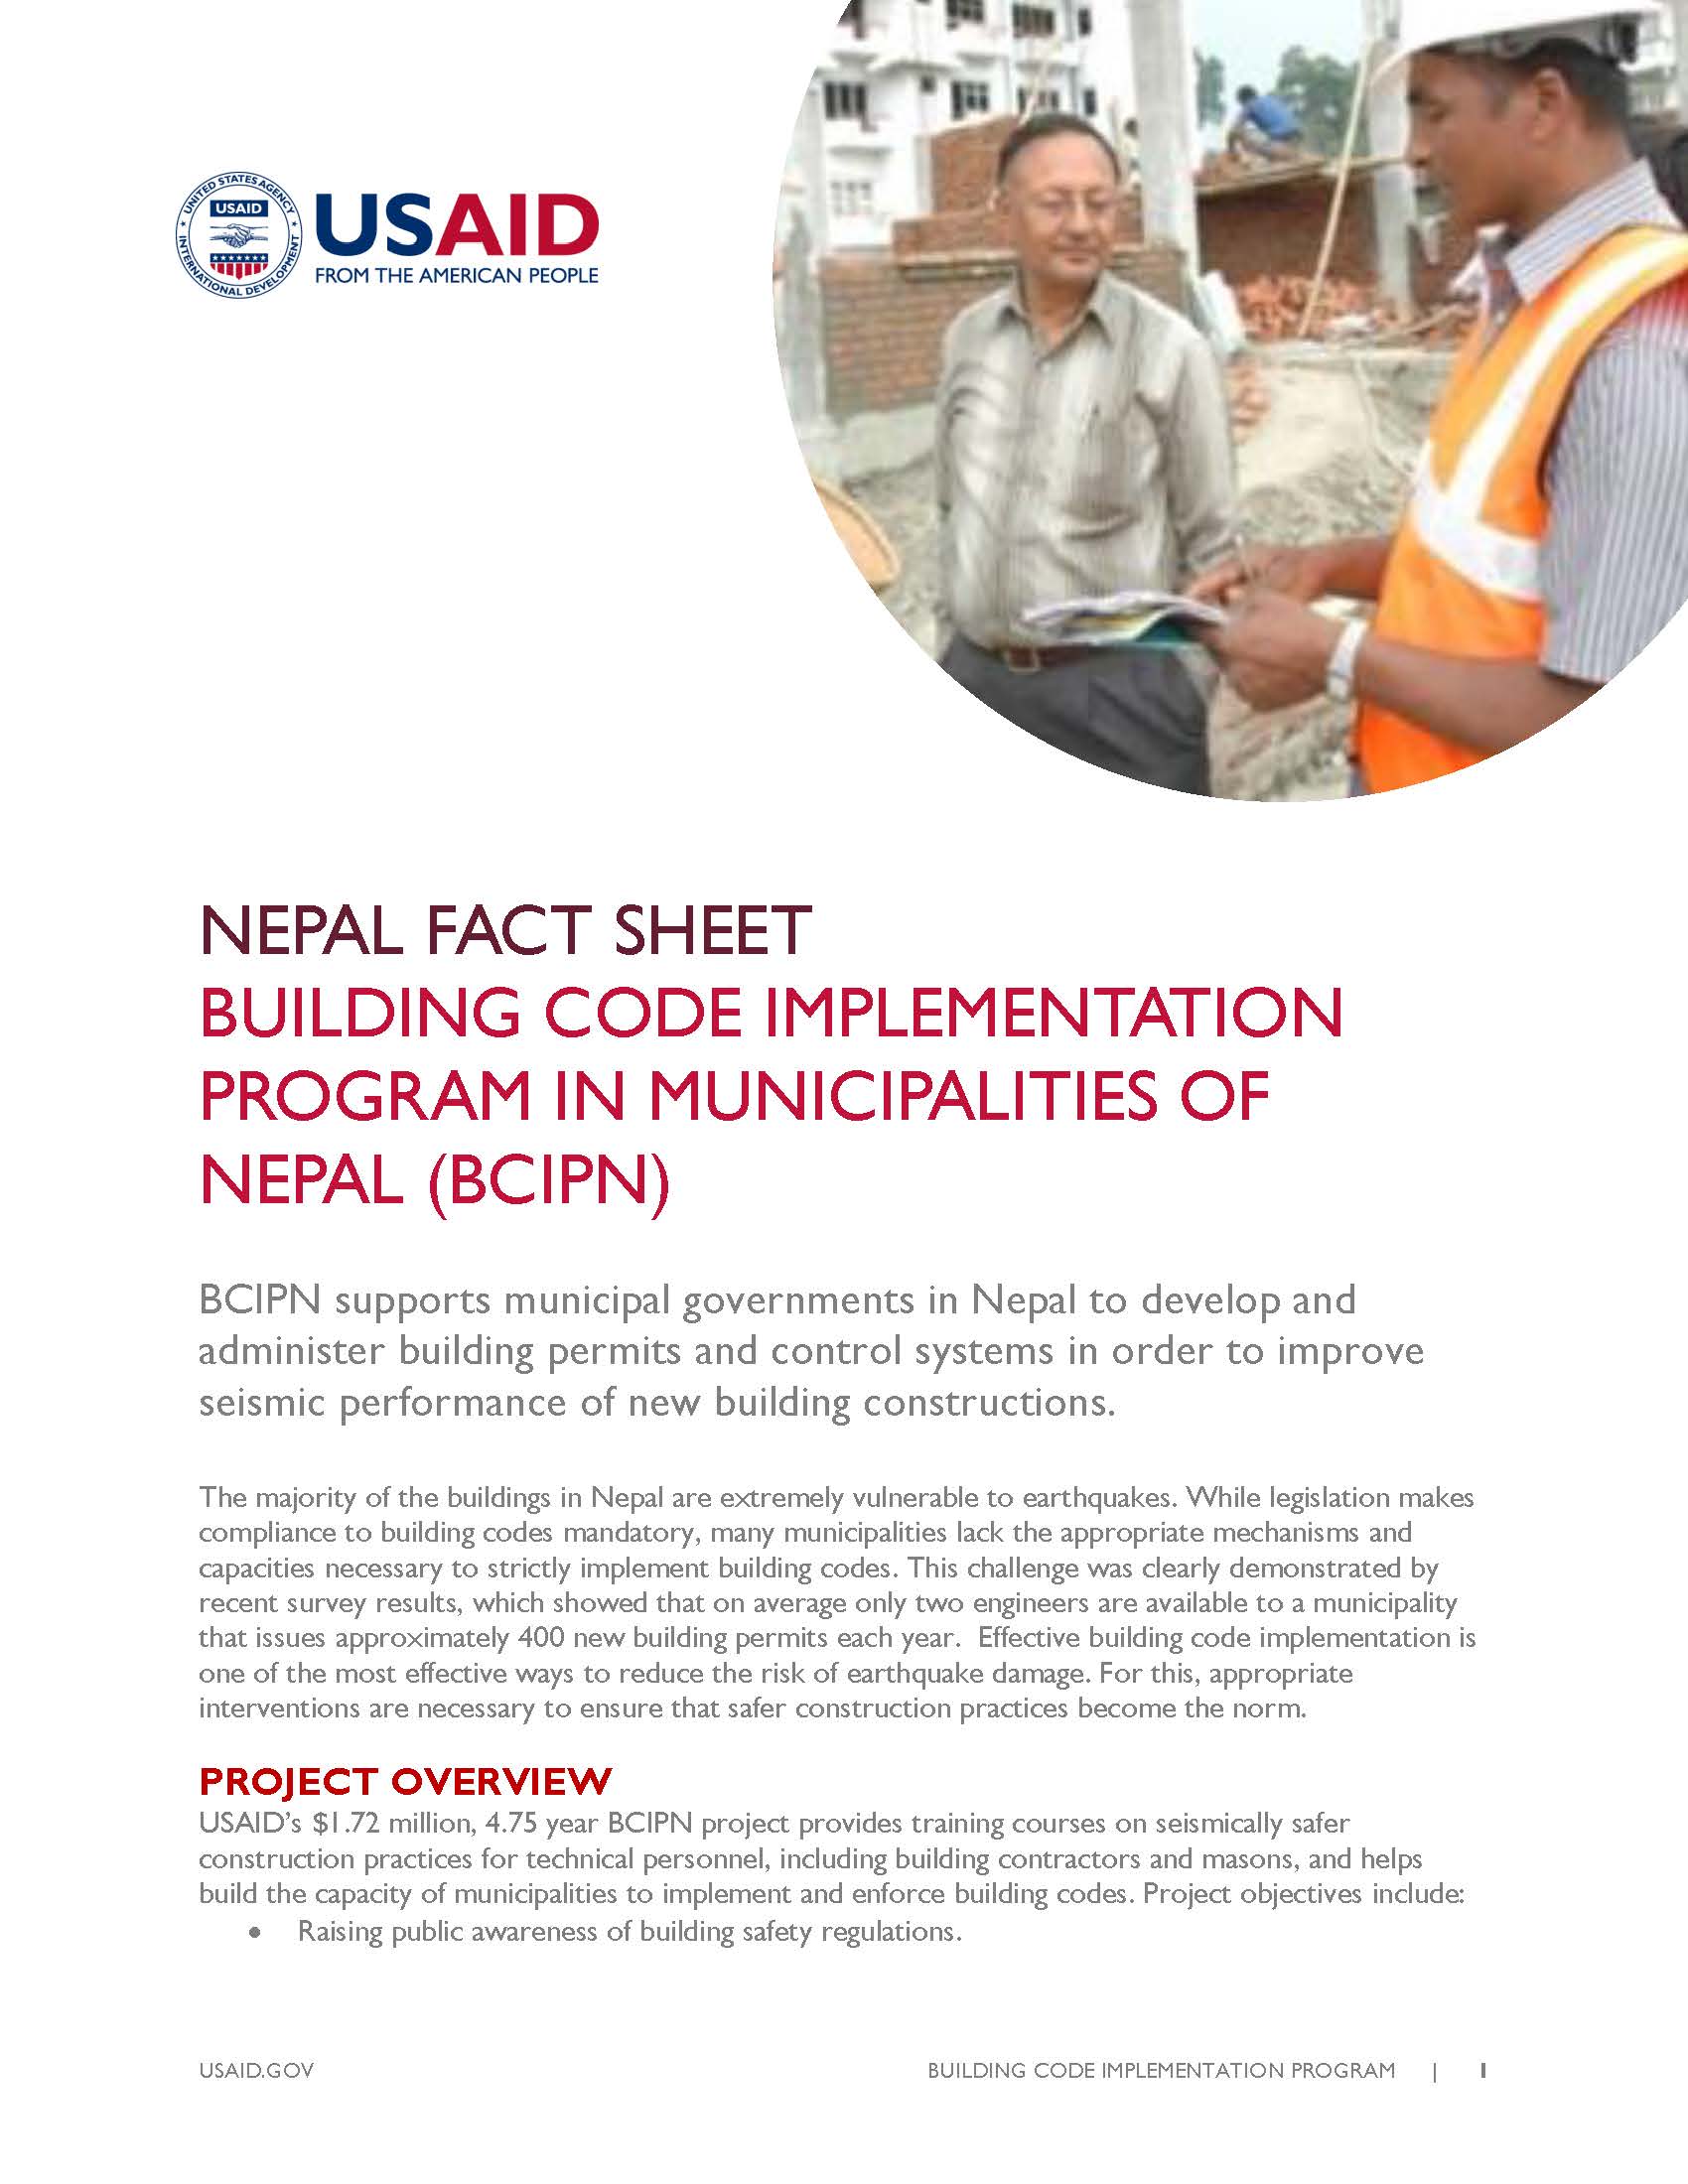 Fact Sheet: BUILDING CODE IMPLEMENTATION PROGRAM IN MUNICIPALITIES OF NEPAL (BCIPN)